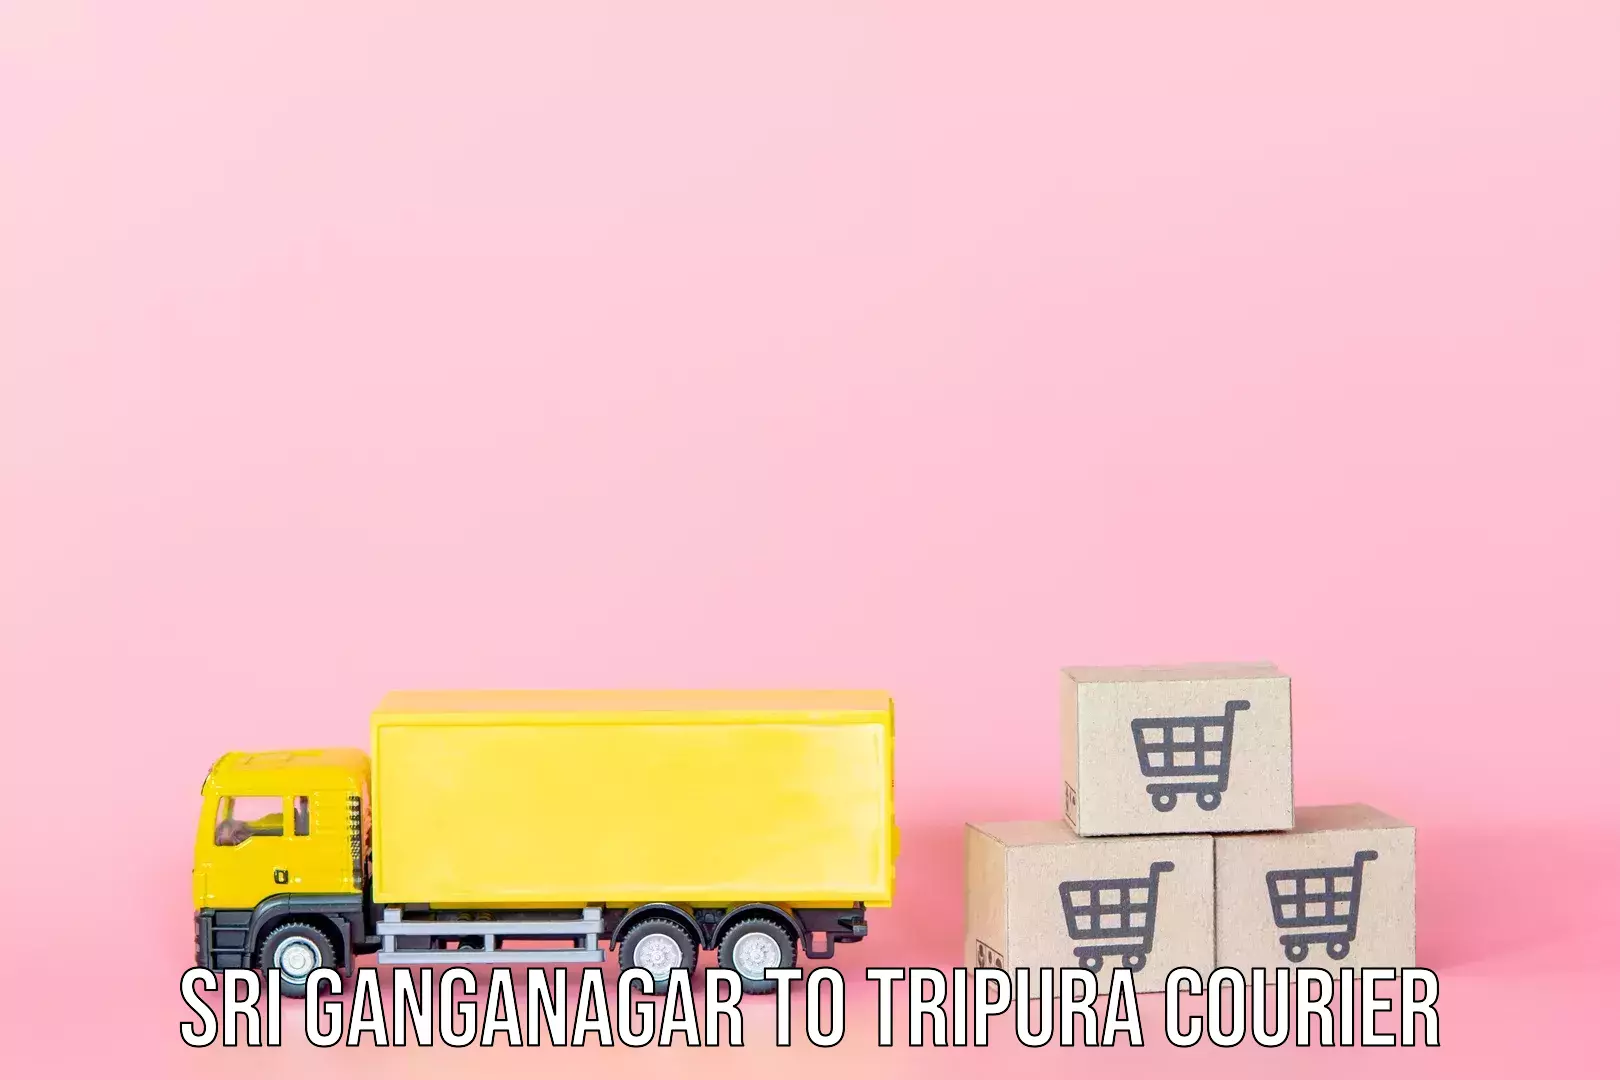 Hassle-free luggage shipping Sri Ganganagar to Udaipur Tripura